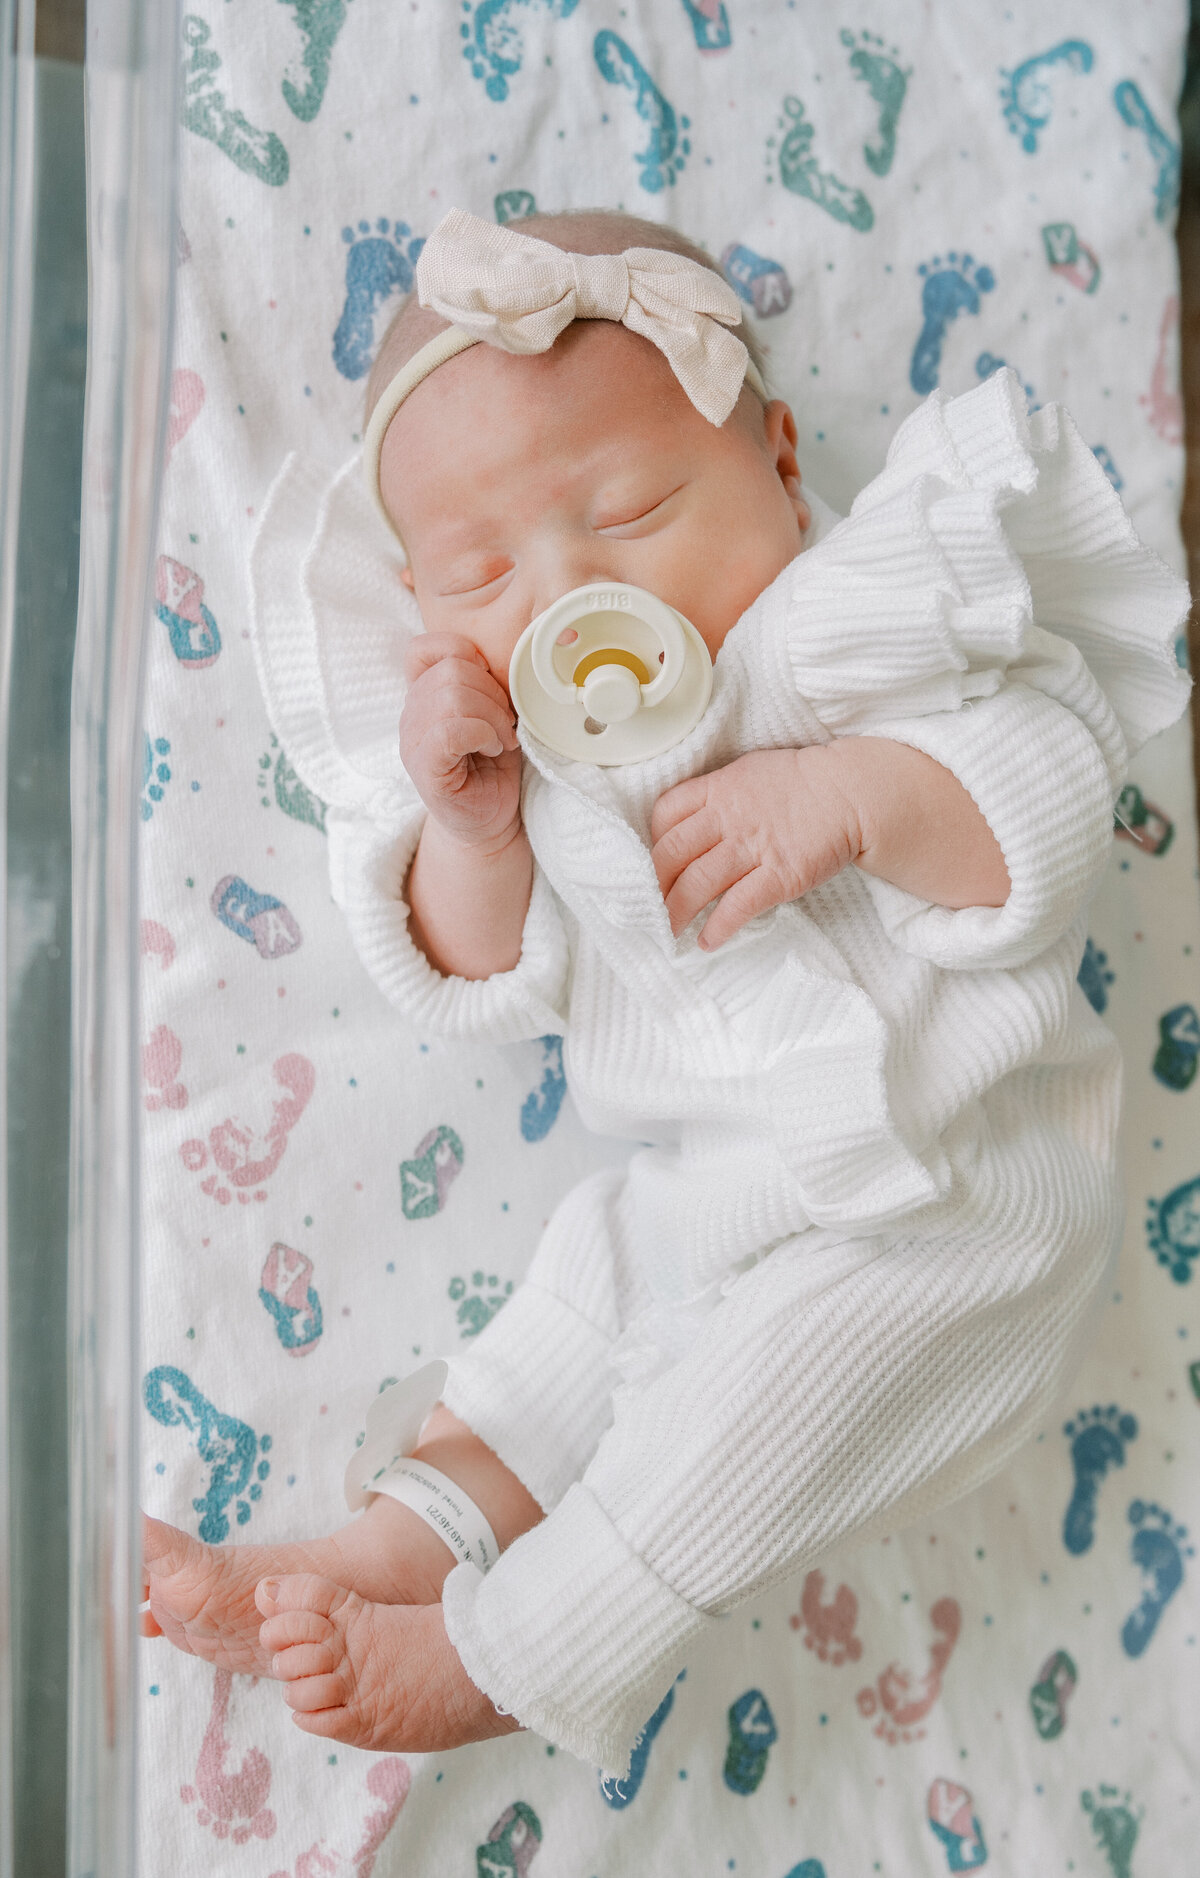 newborn in hospital bassinet